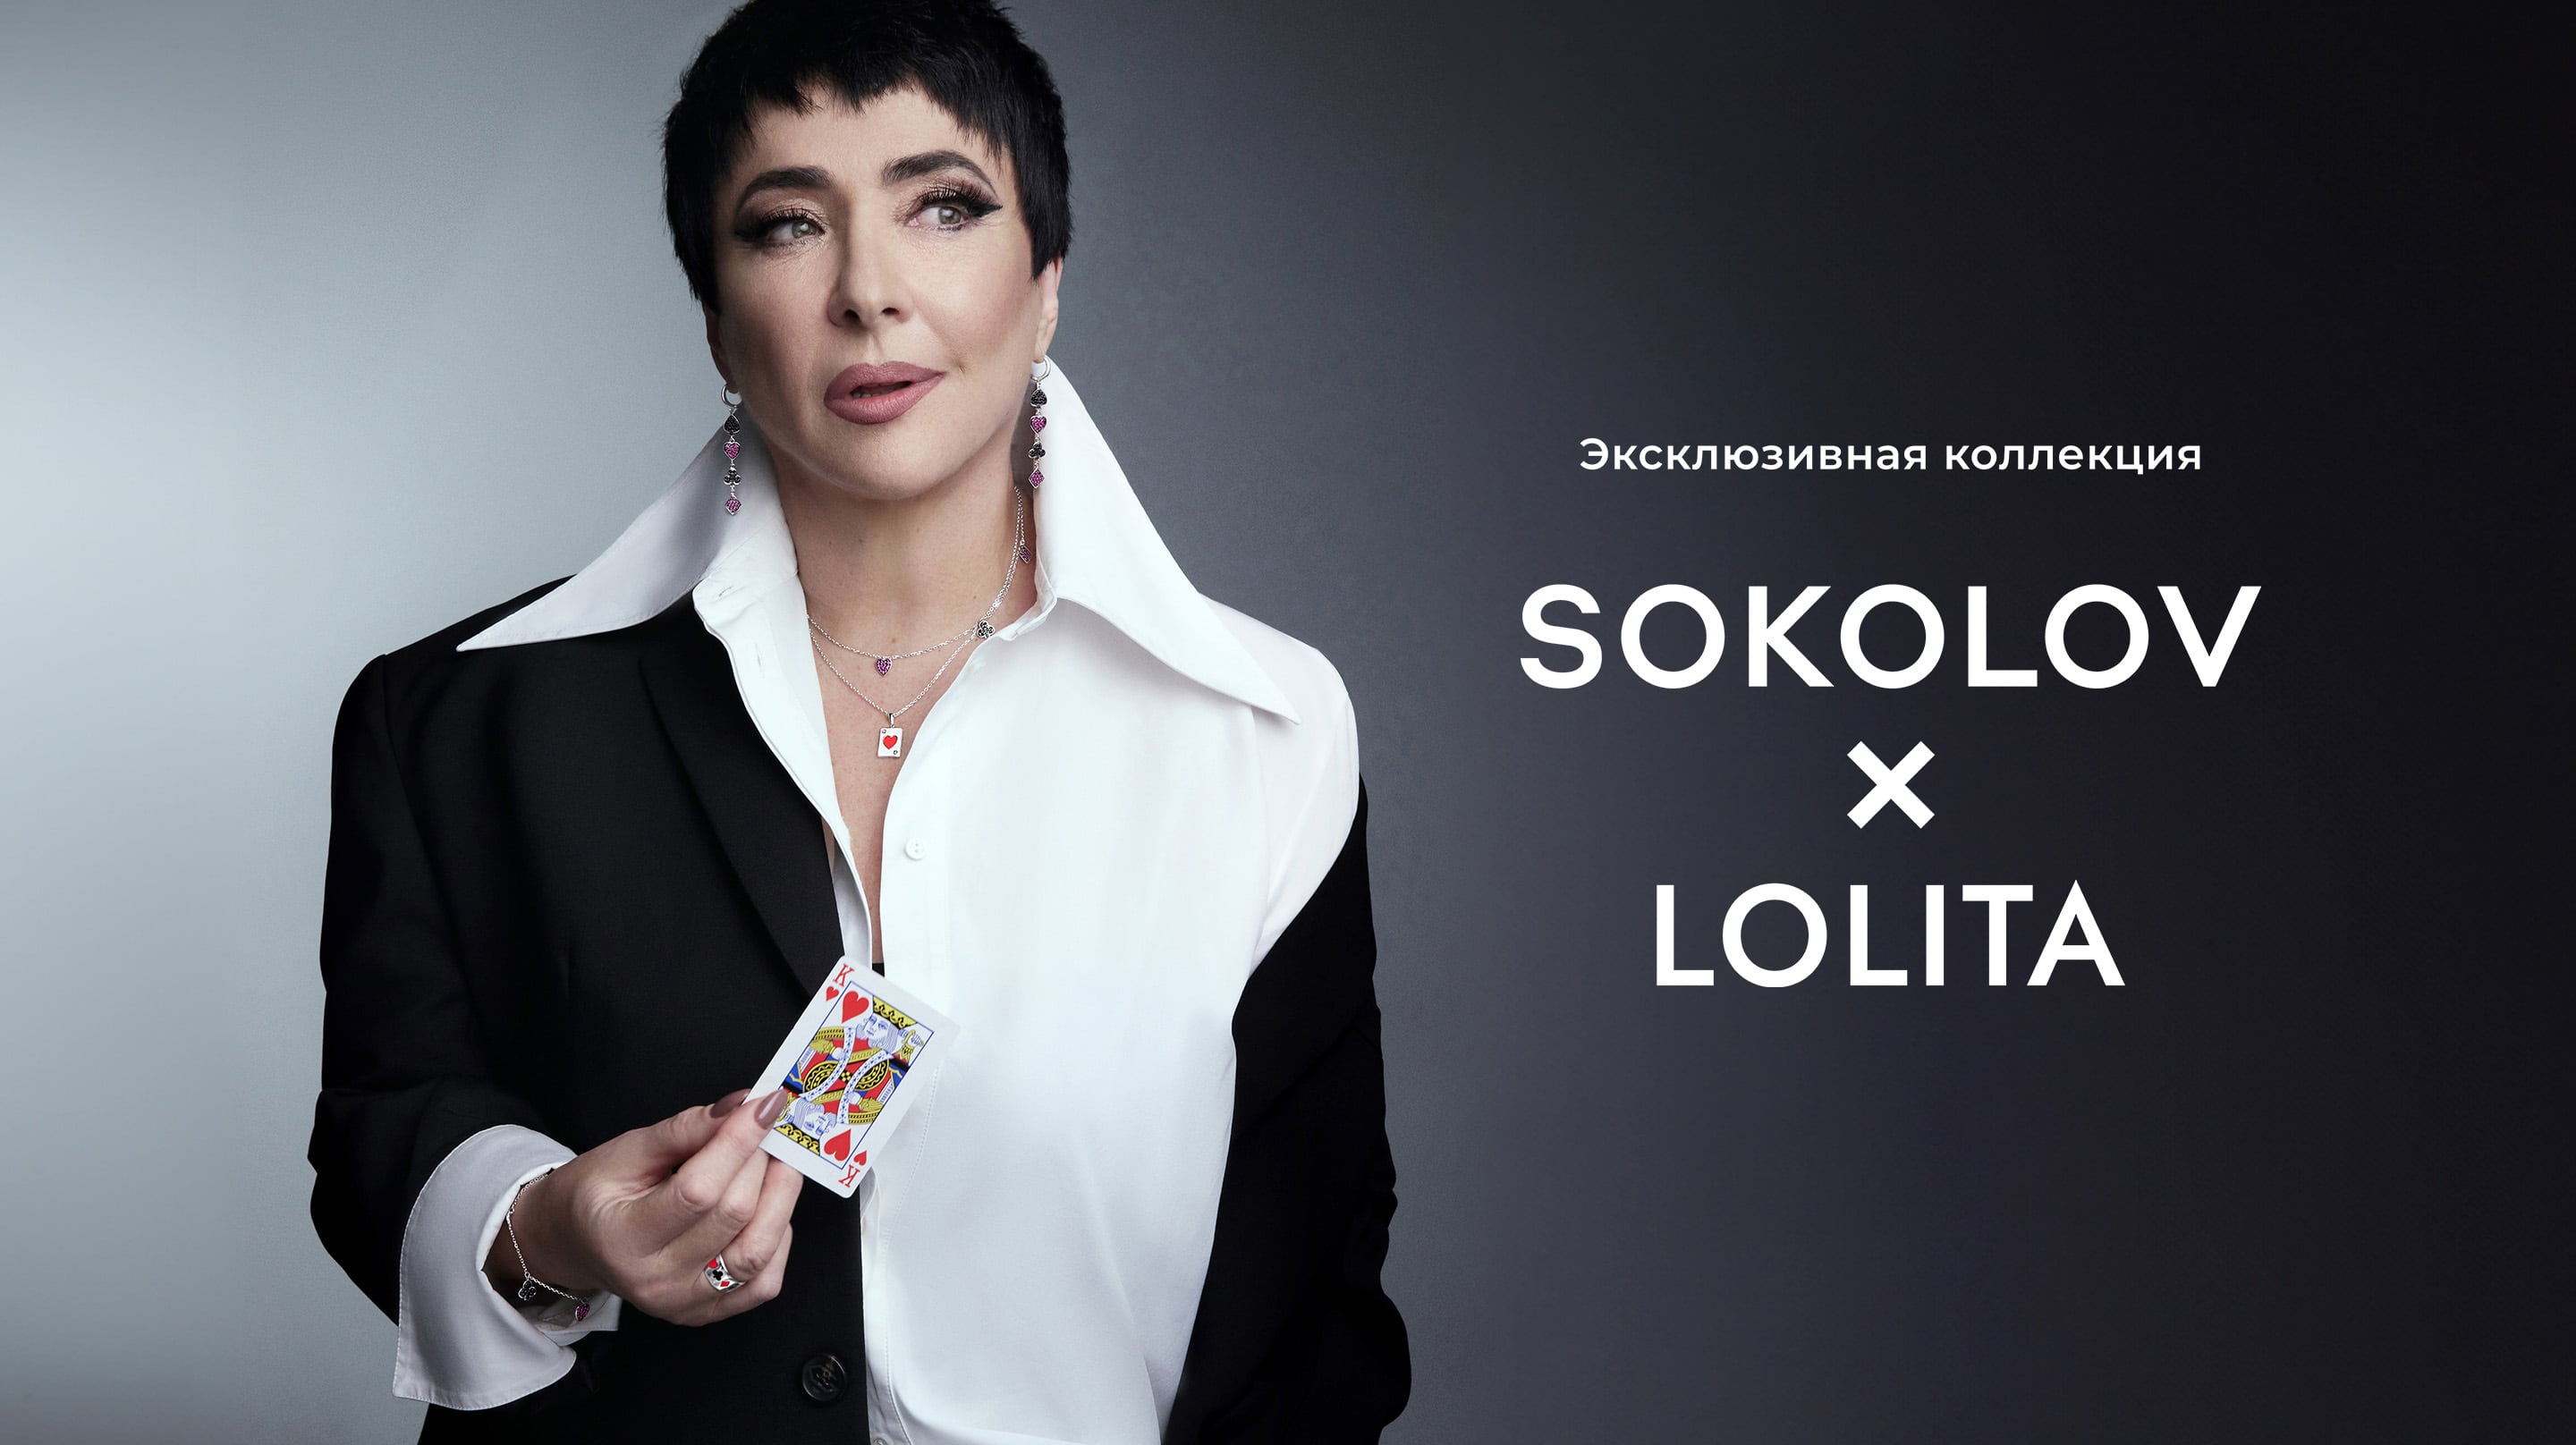 SOKOLOV Lolita: main poster